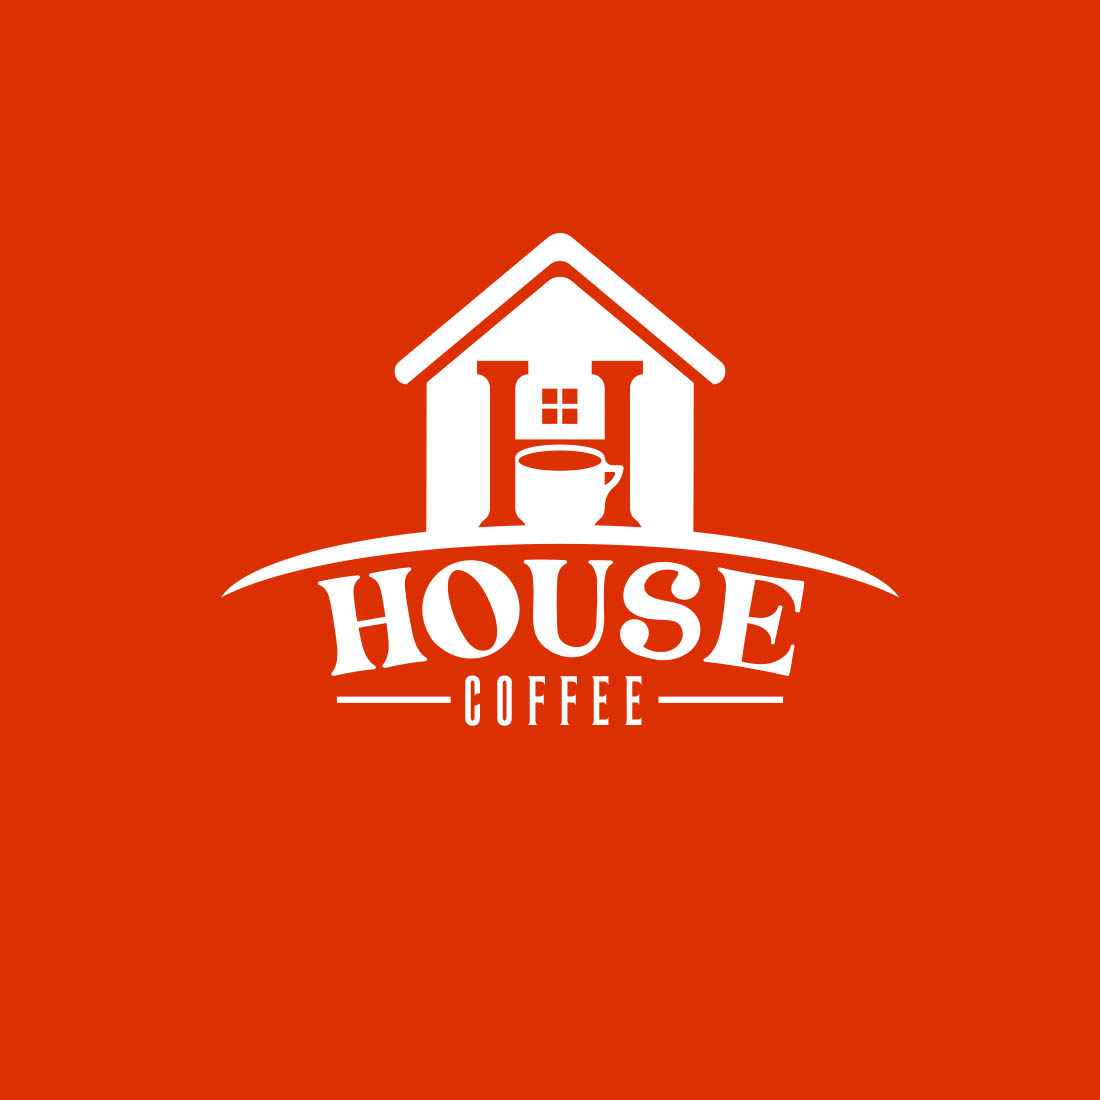 Premium Vector | Simple home coffee shop or cafe logo